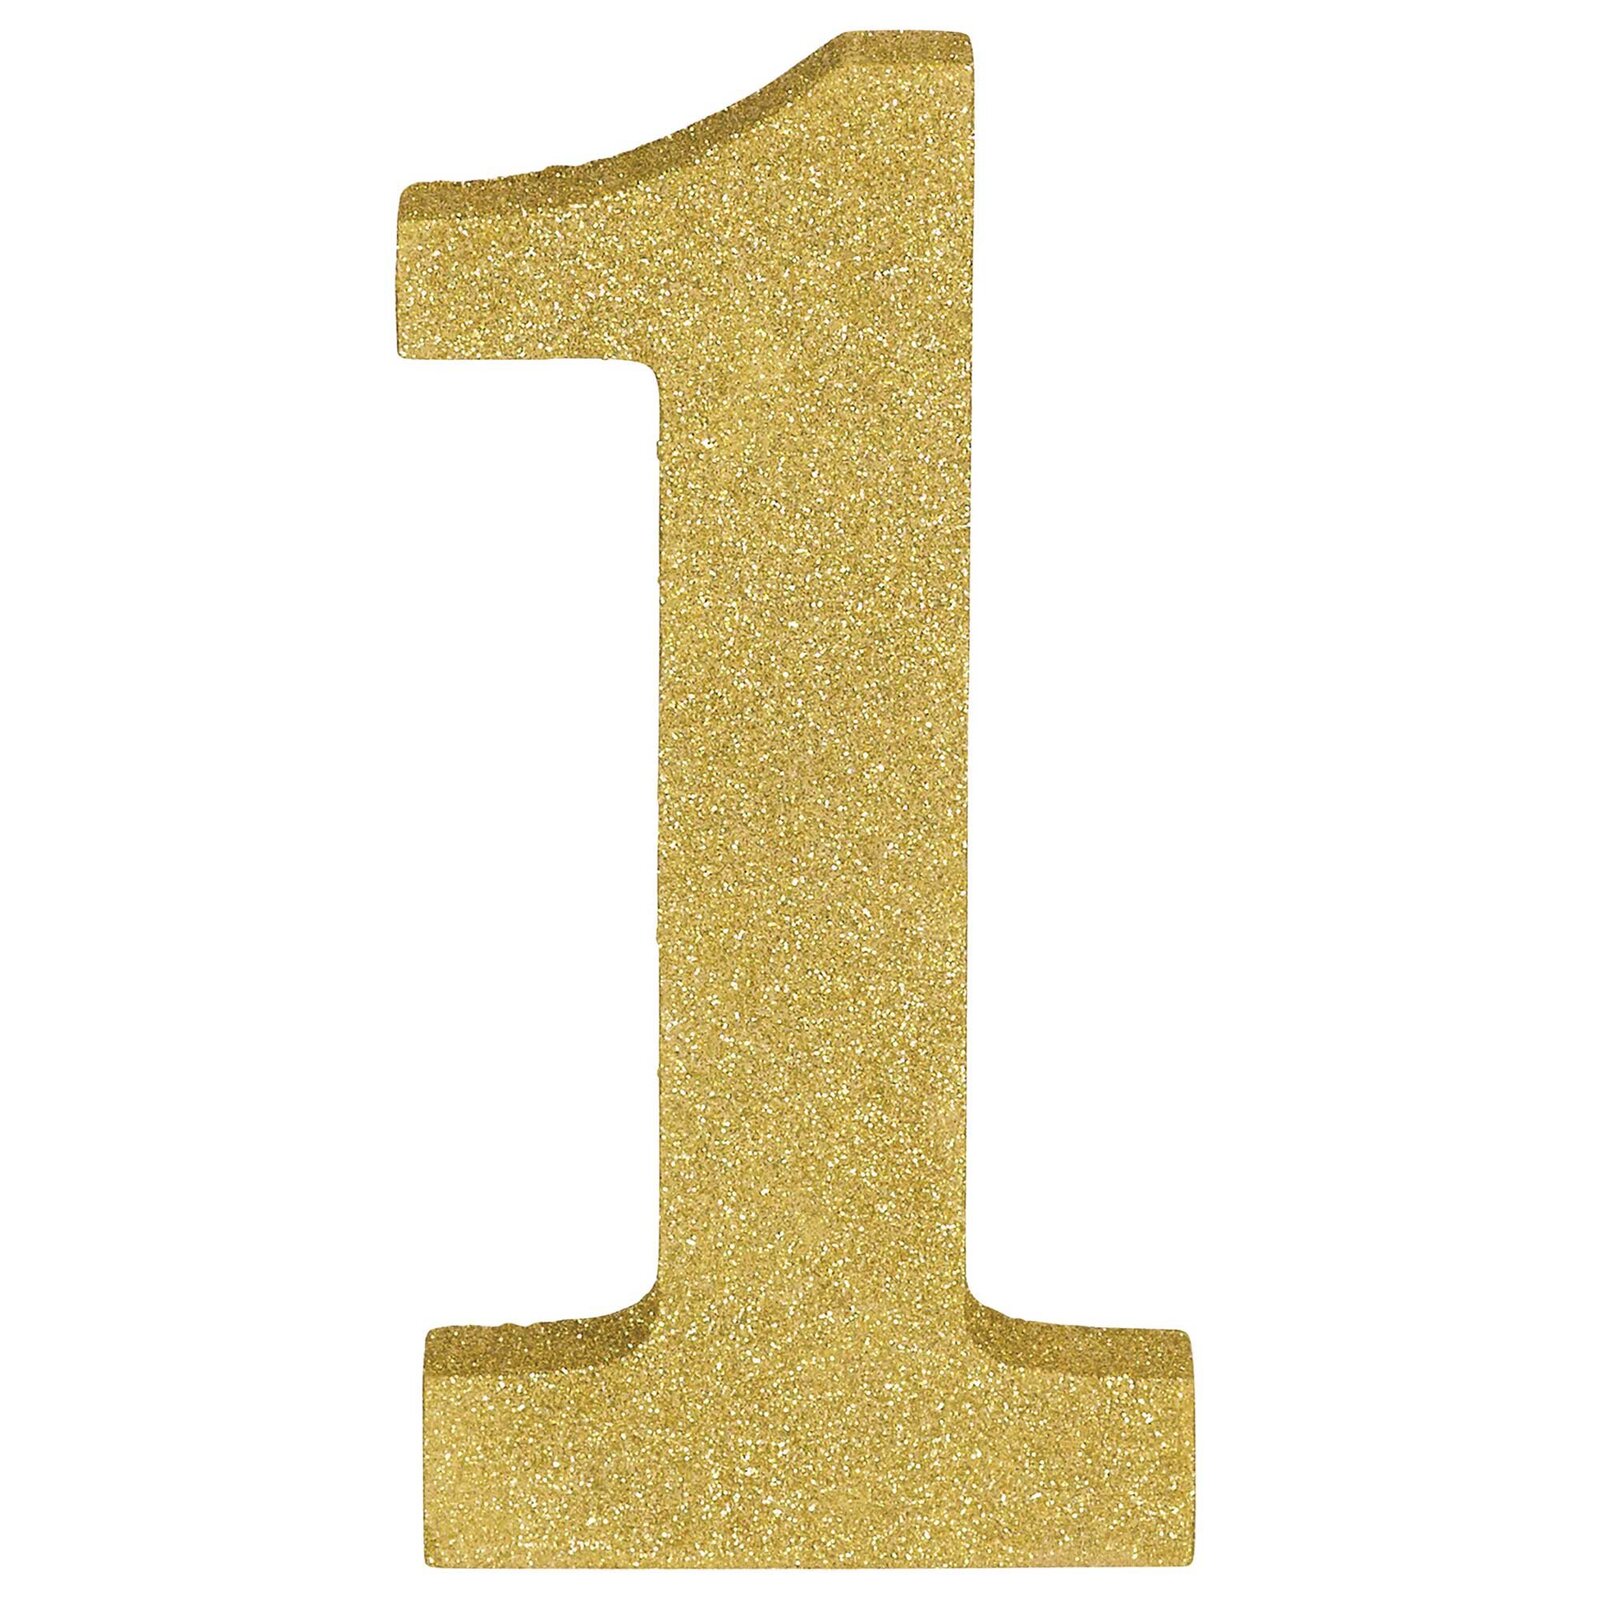 Number 1 Gold Glitter Wooden Decoration